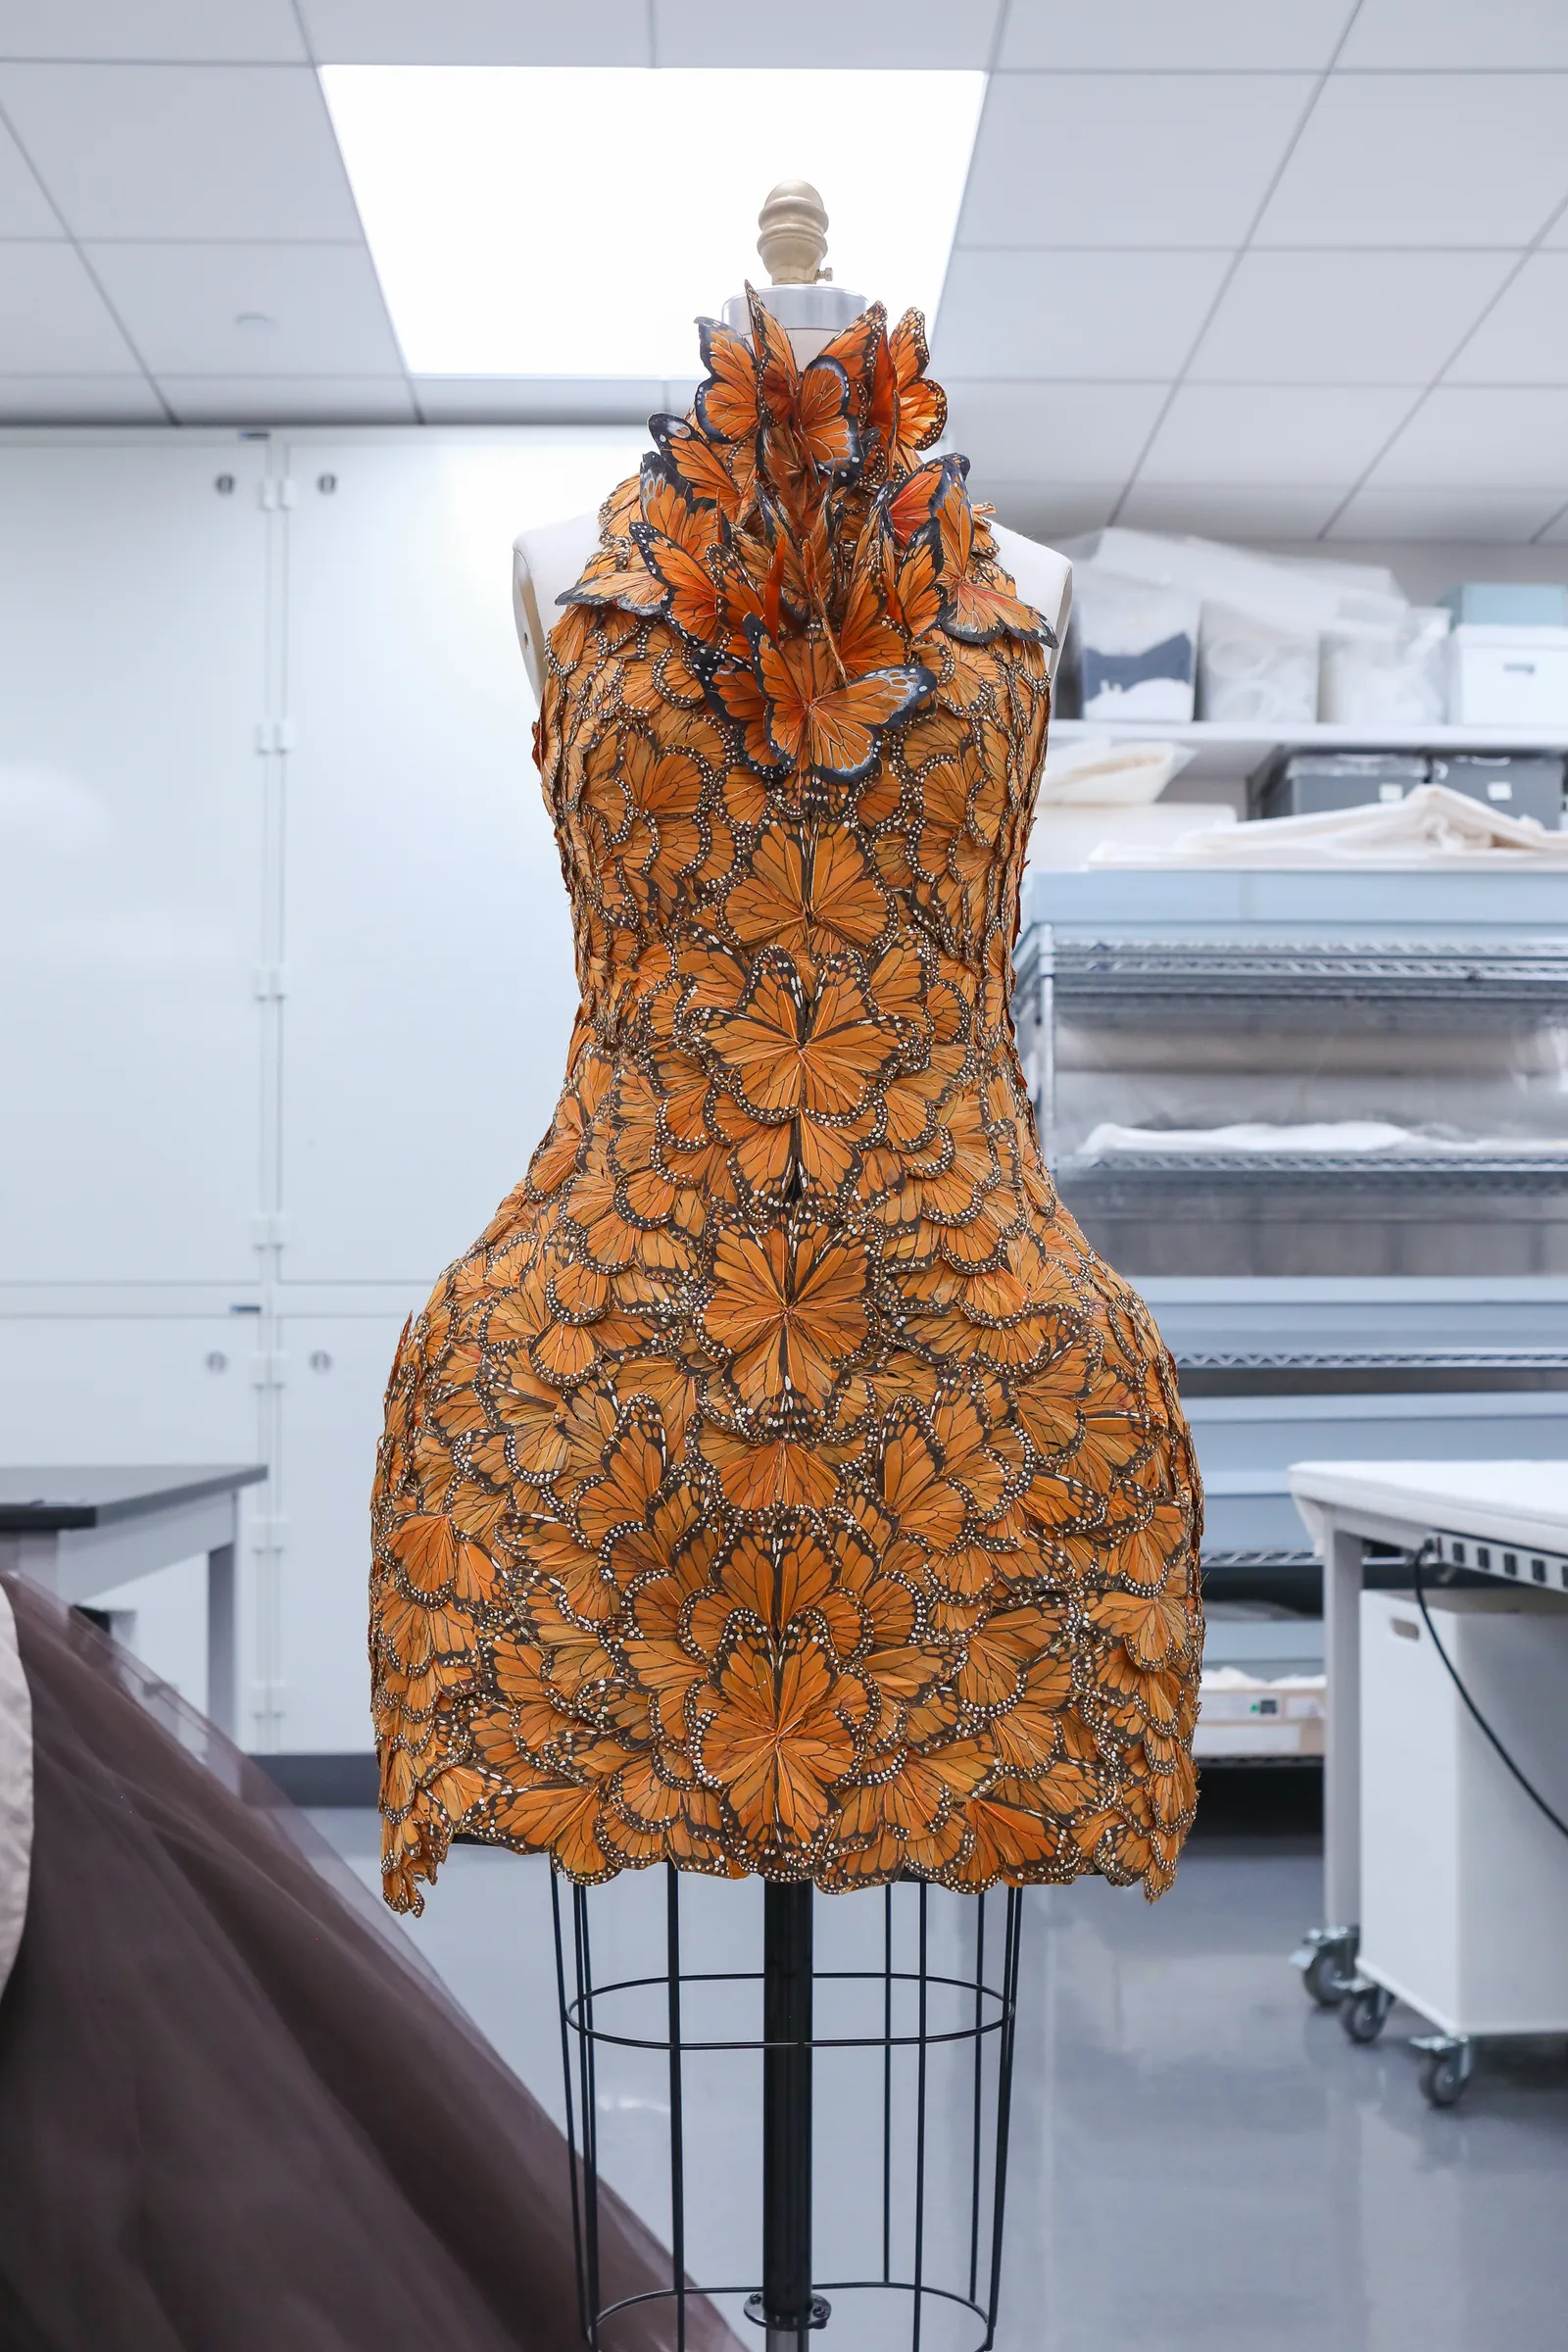 Sukienka, Alexander McQueen, wiosna 2011. (Fot. The Metropolitan Museum of Art)